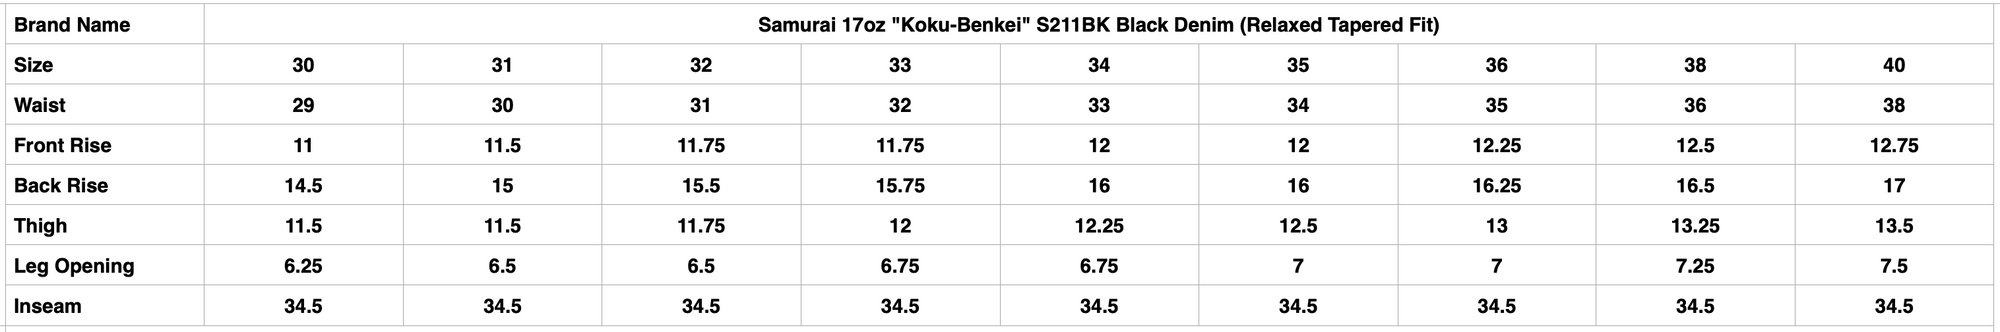 Samurai 17oz "Koku-Benkei" S211BK Black Denim (Relaxed Tapered Fit)